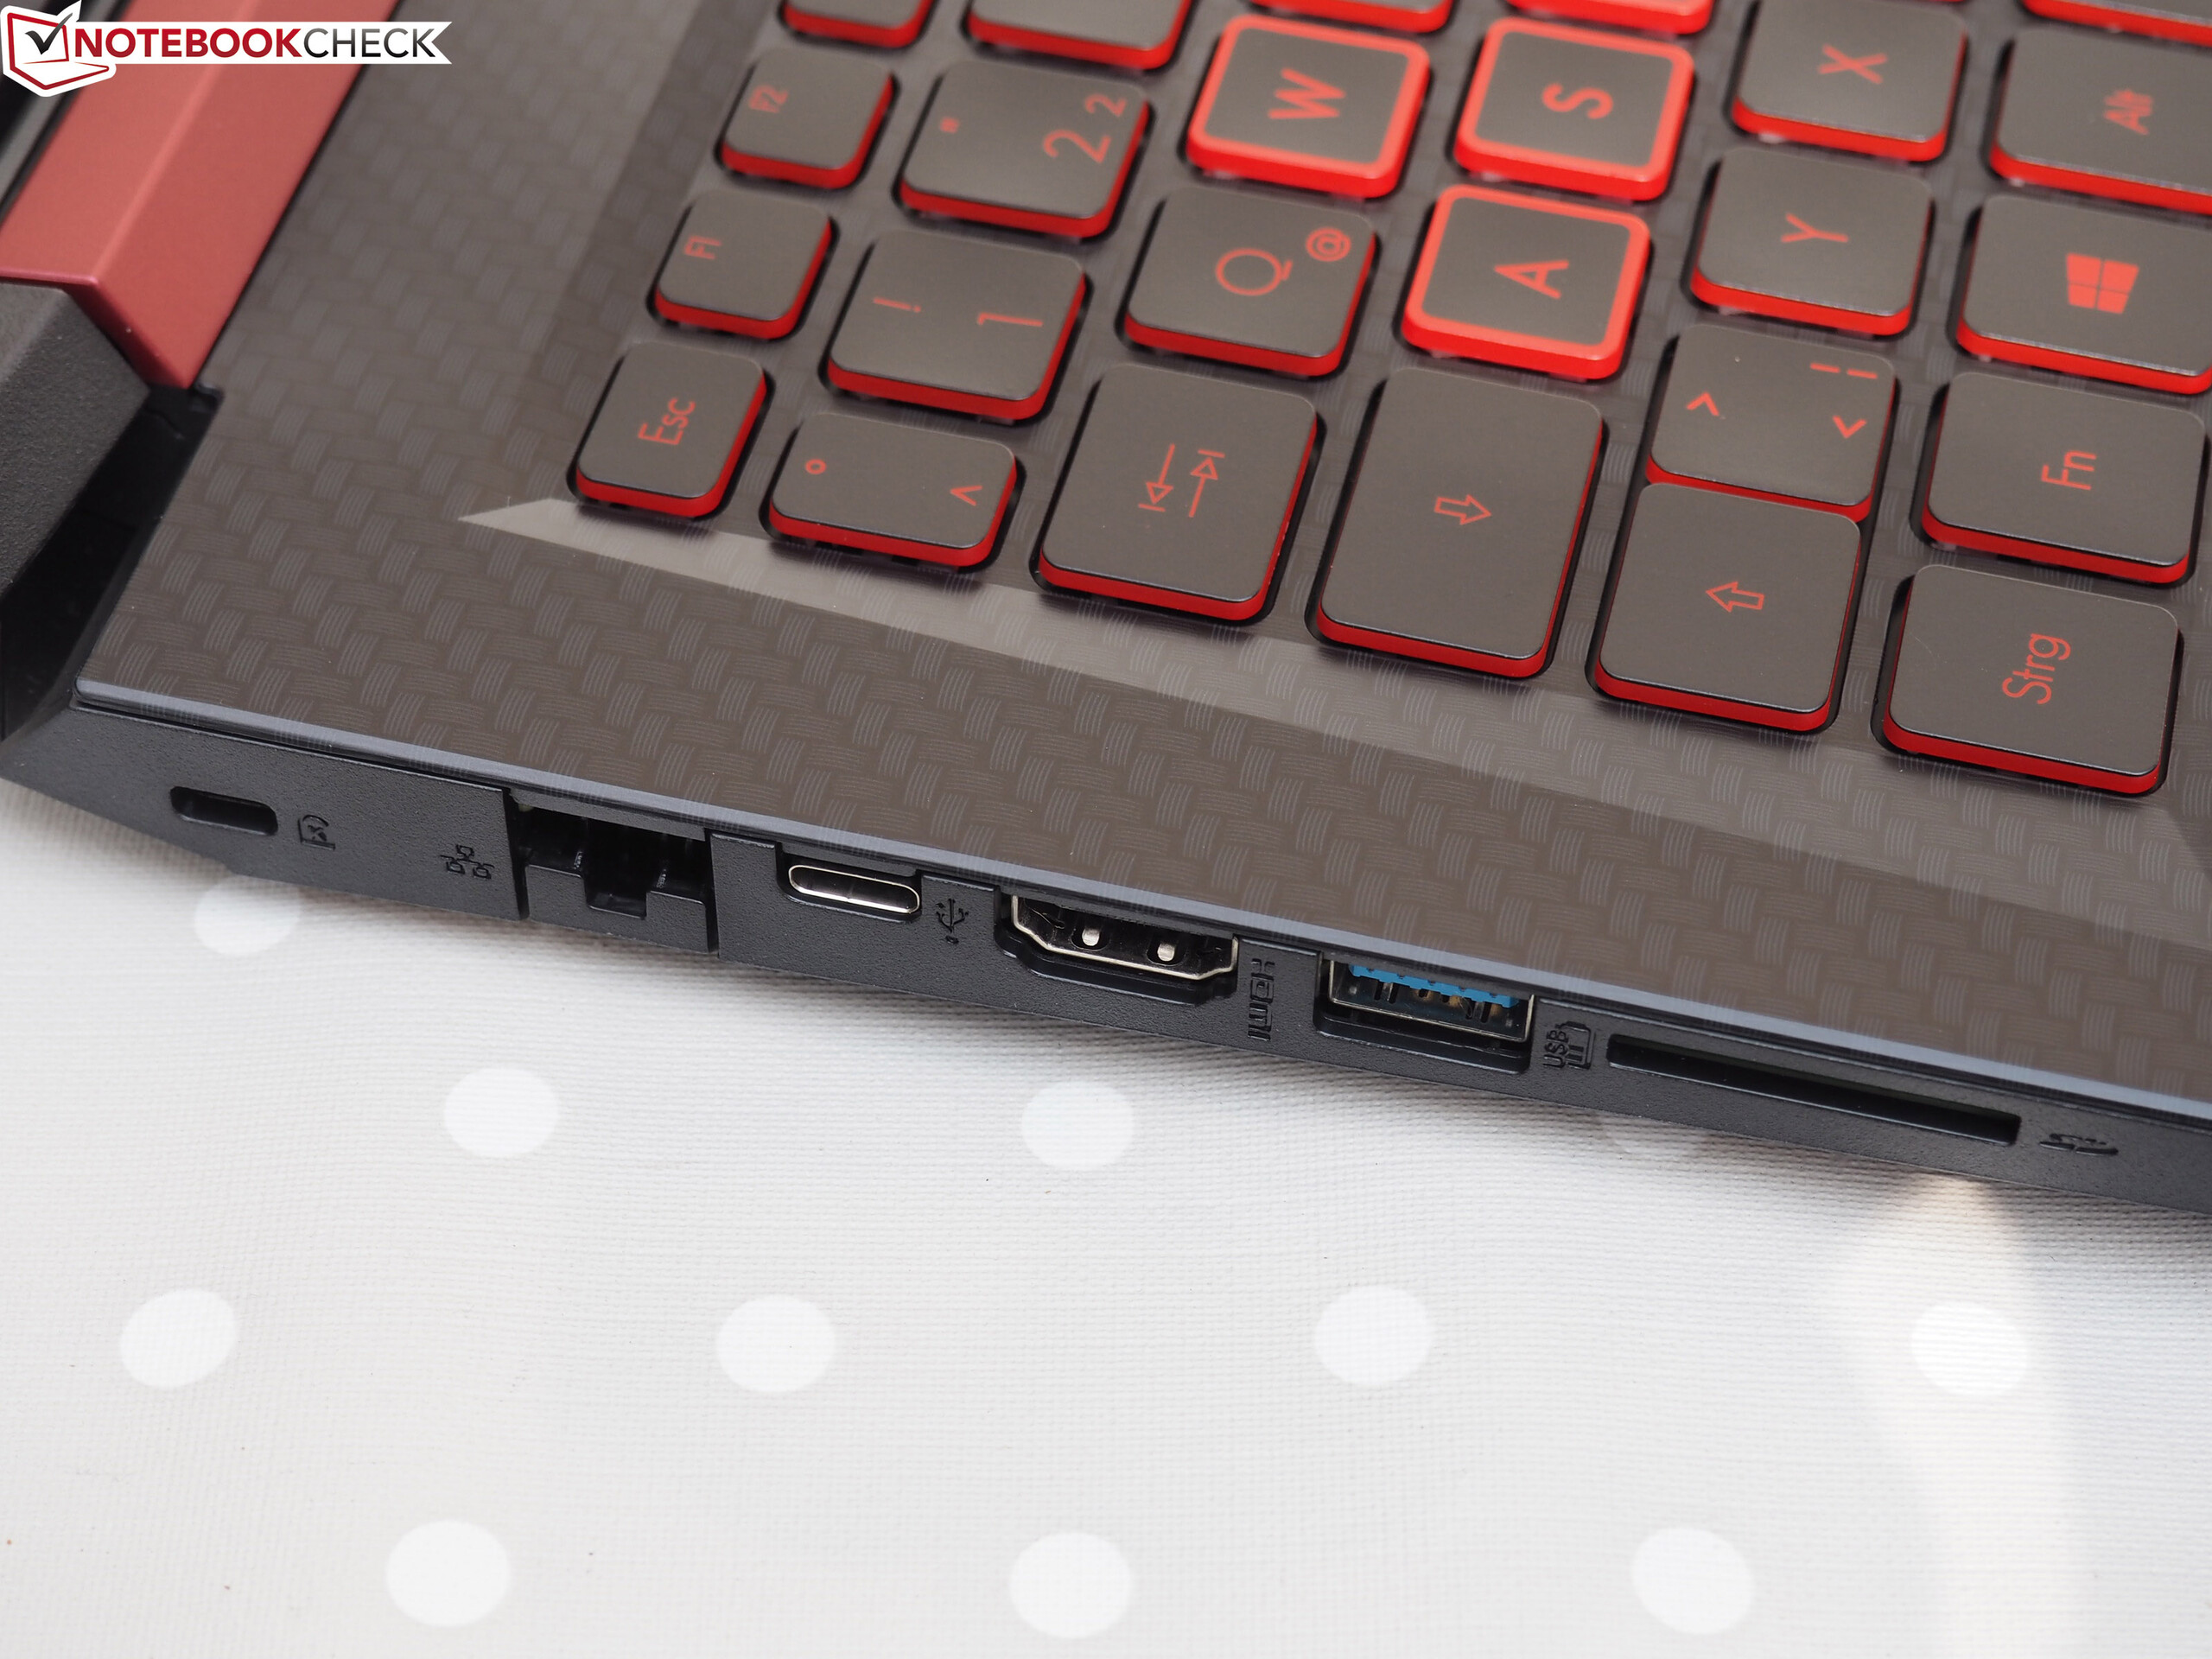 Acer Nitro 5 (i7-8750H, GTX 1050 Ti, FHD) Laptop Review 